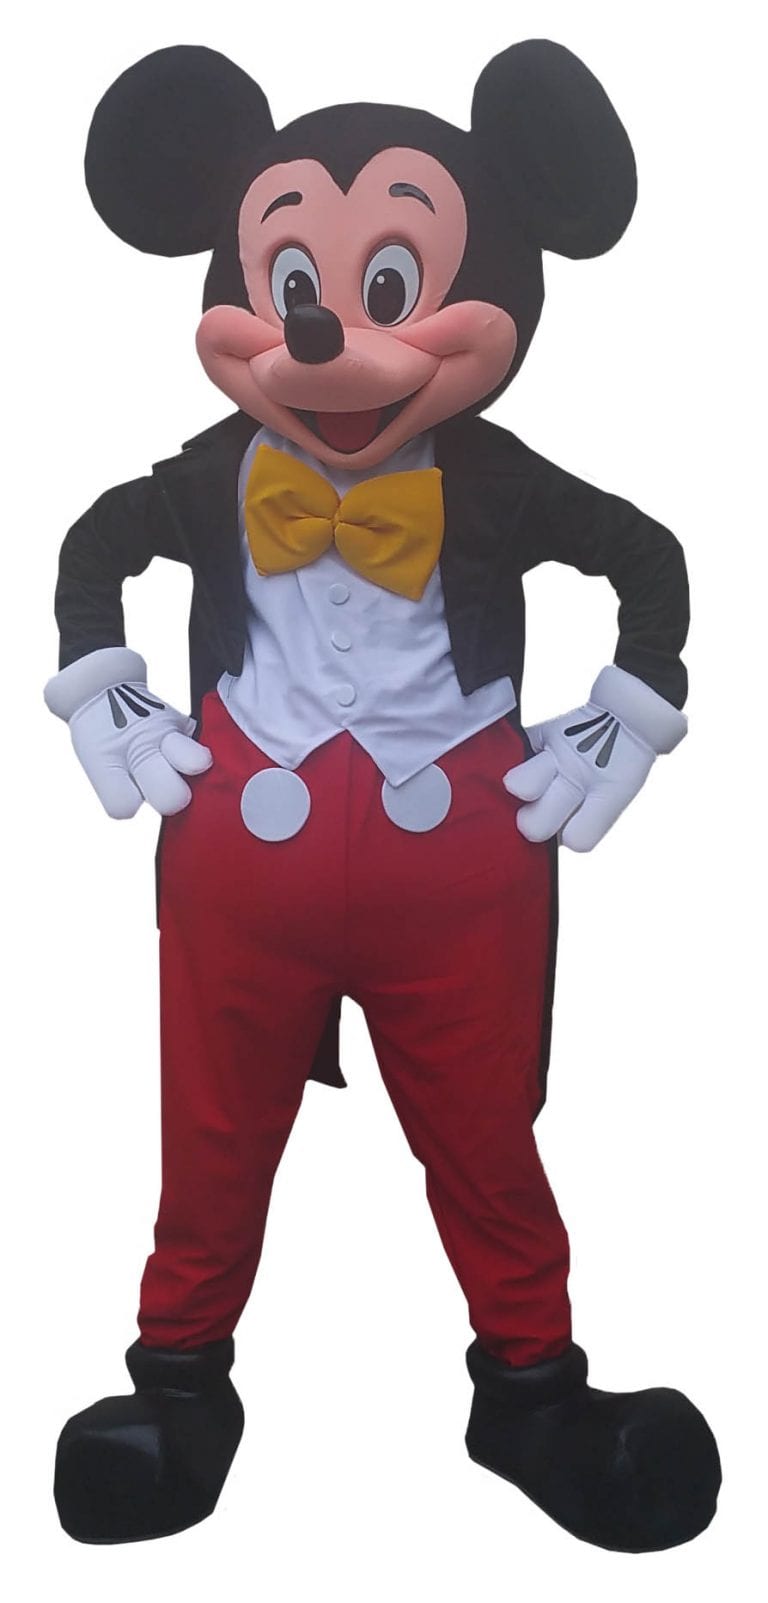 Popular Disney Mascot Character Entertainers for Children